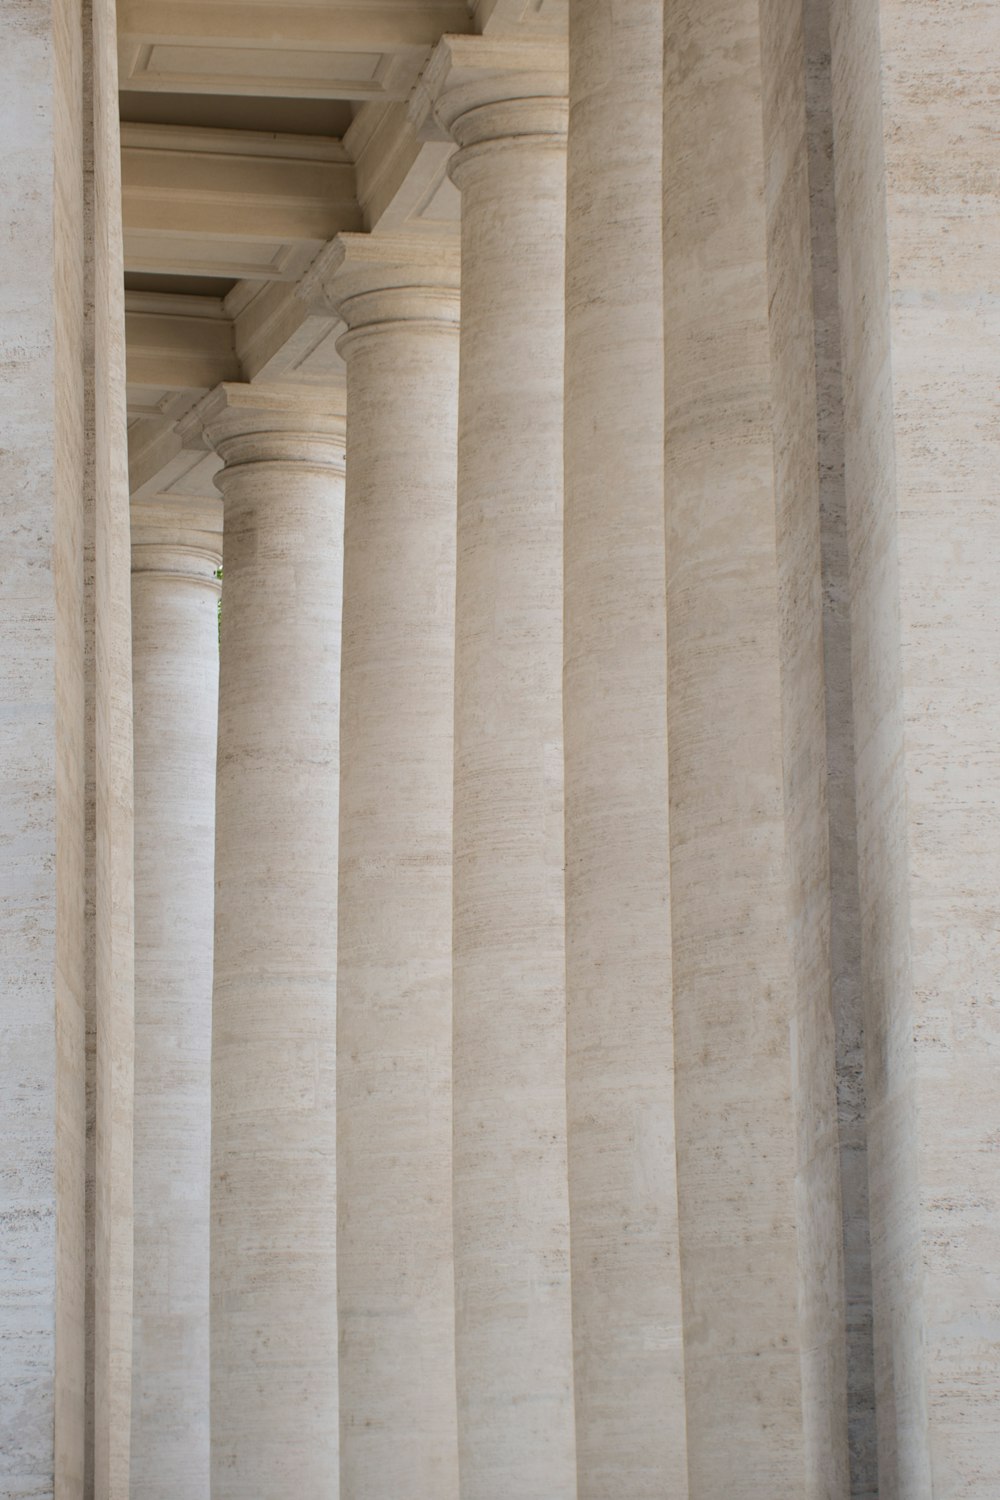 a close-up of some pillars